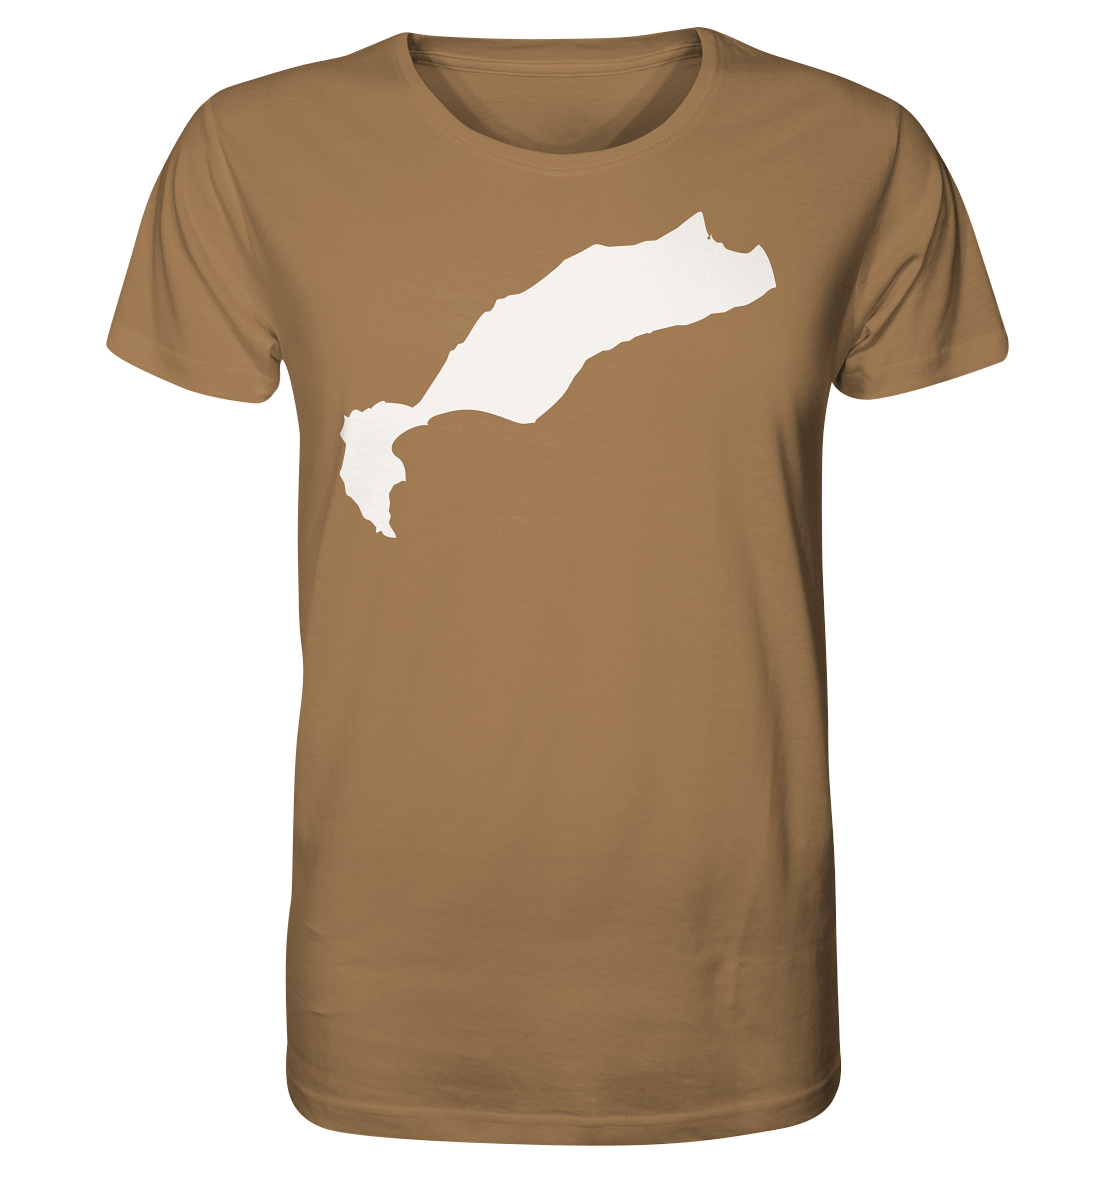 Kos Insel Silhouette - Organic Shirt